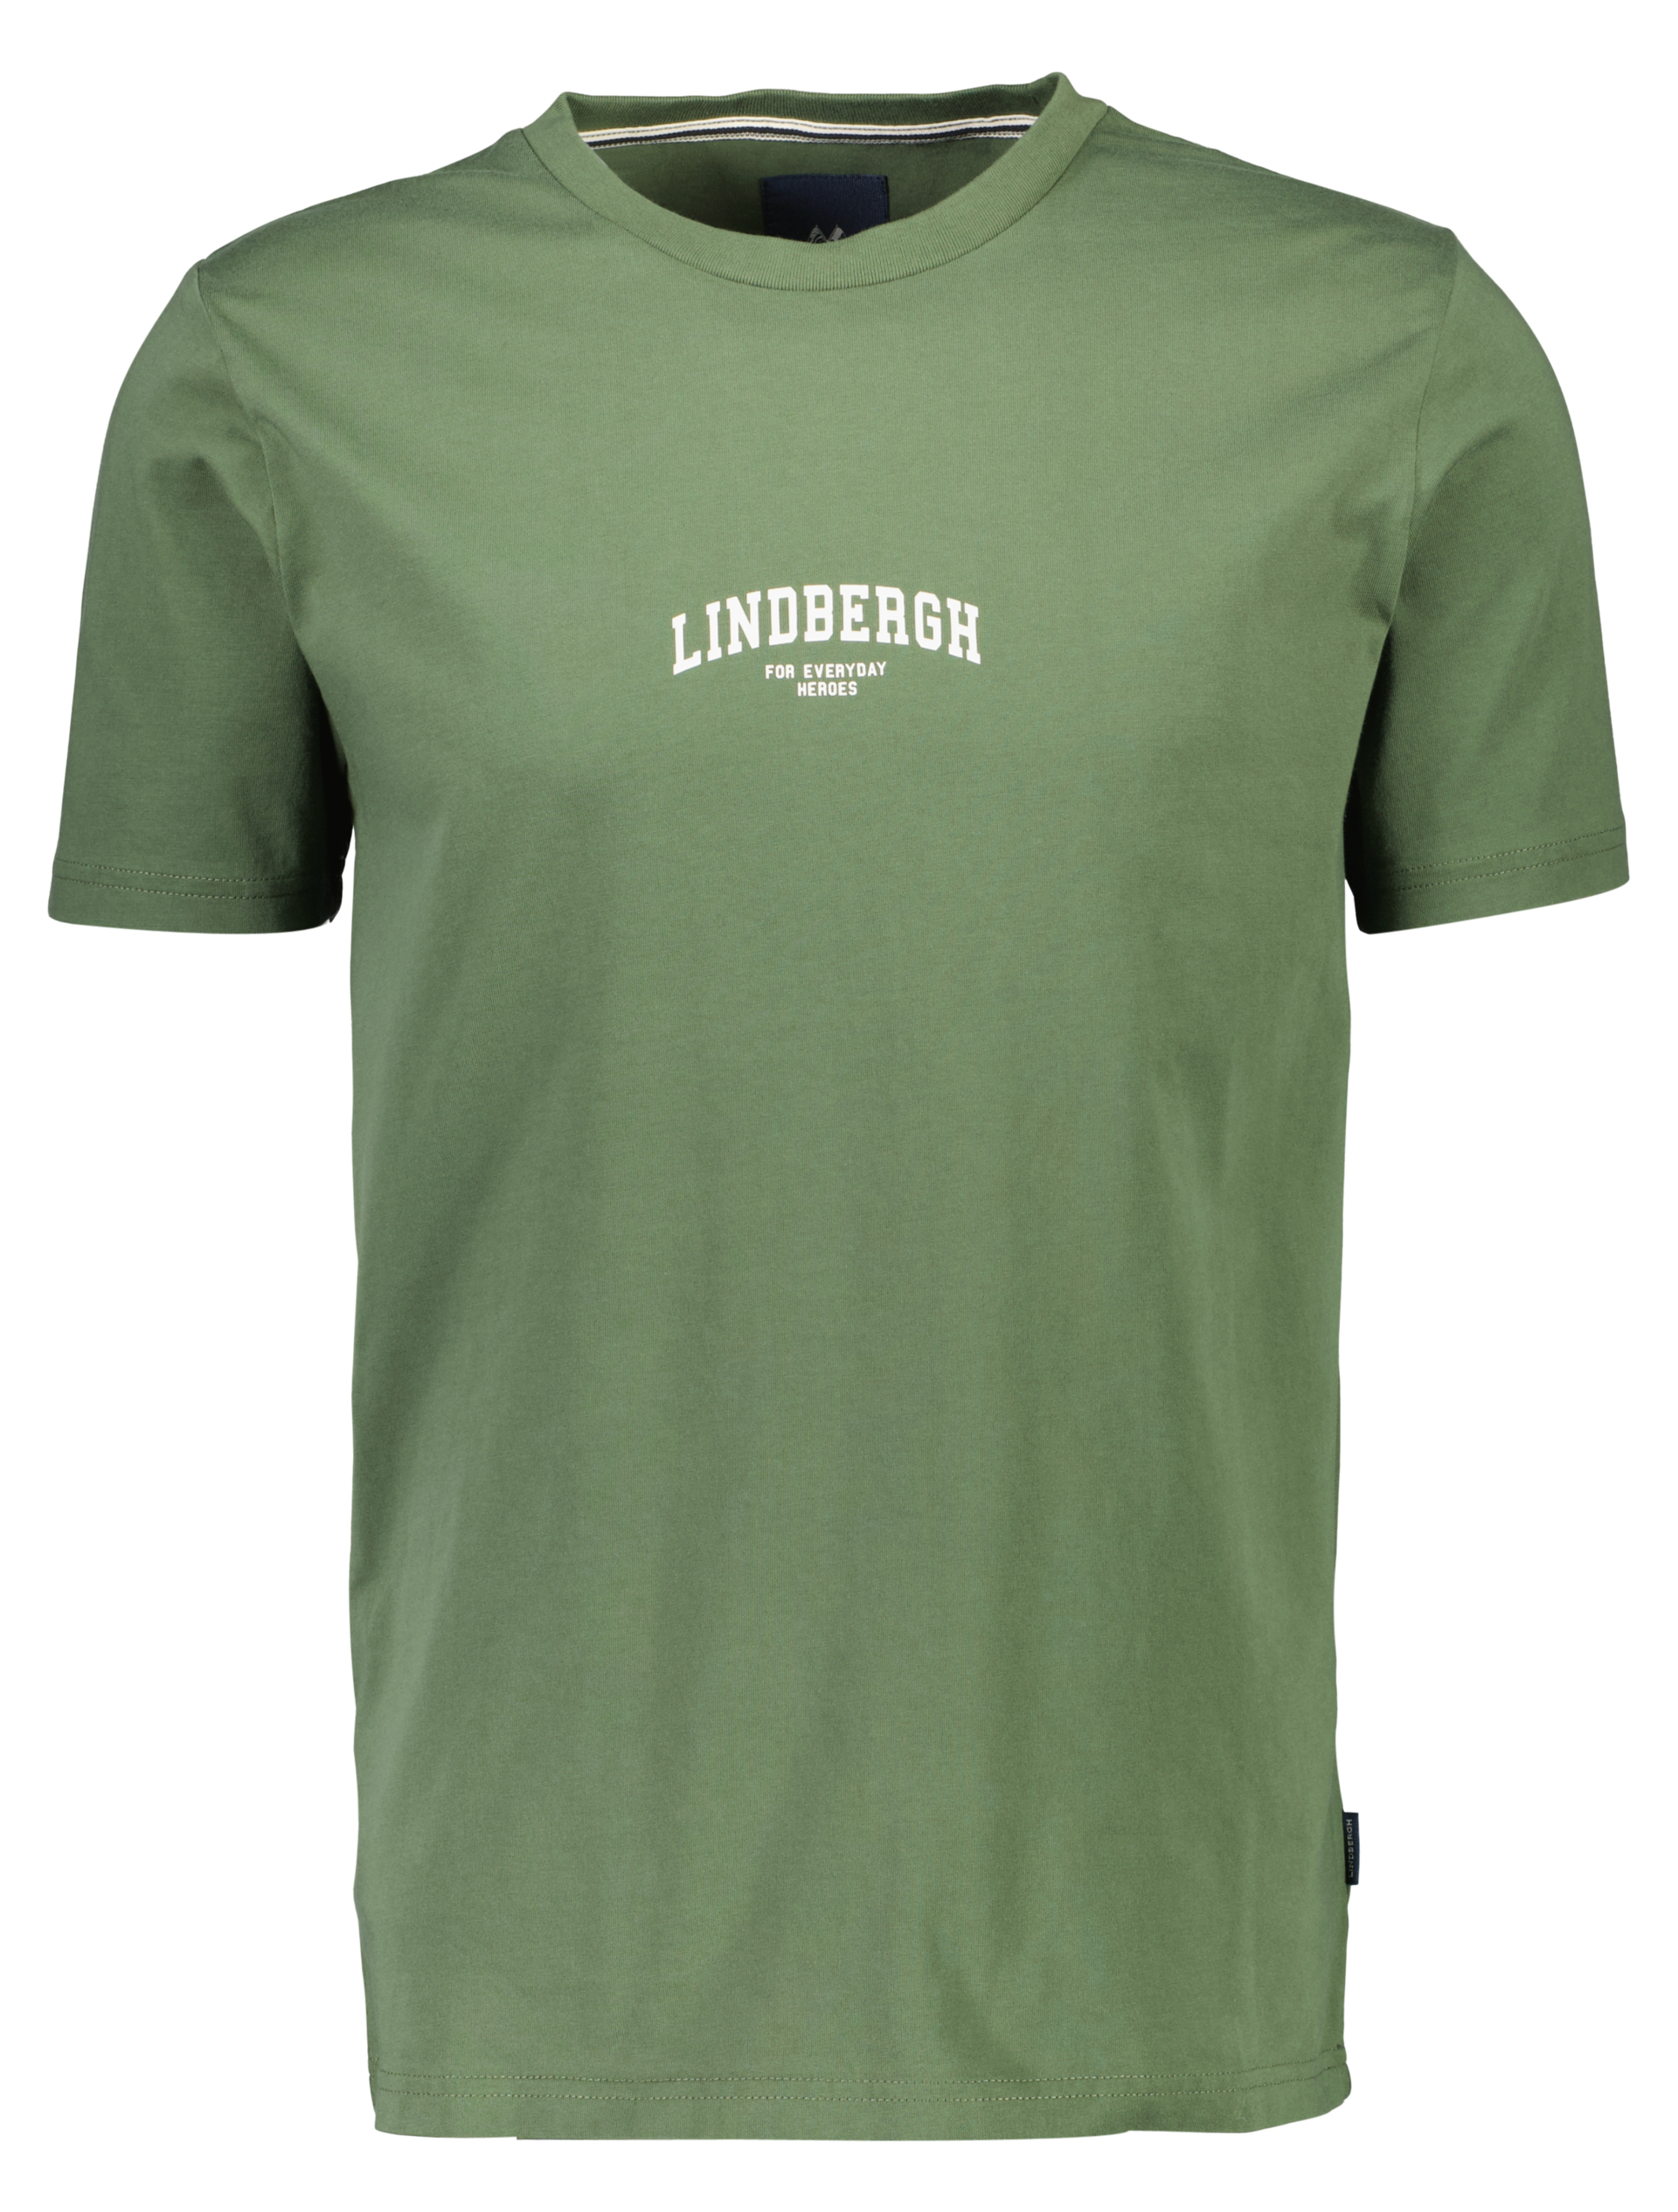 Lindbergh T-shirt grün / green